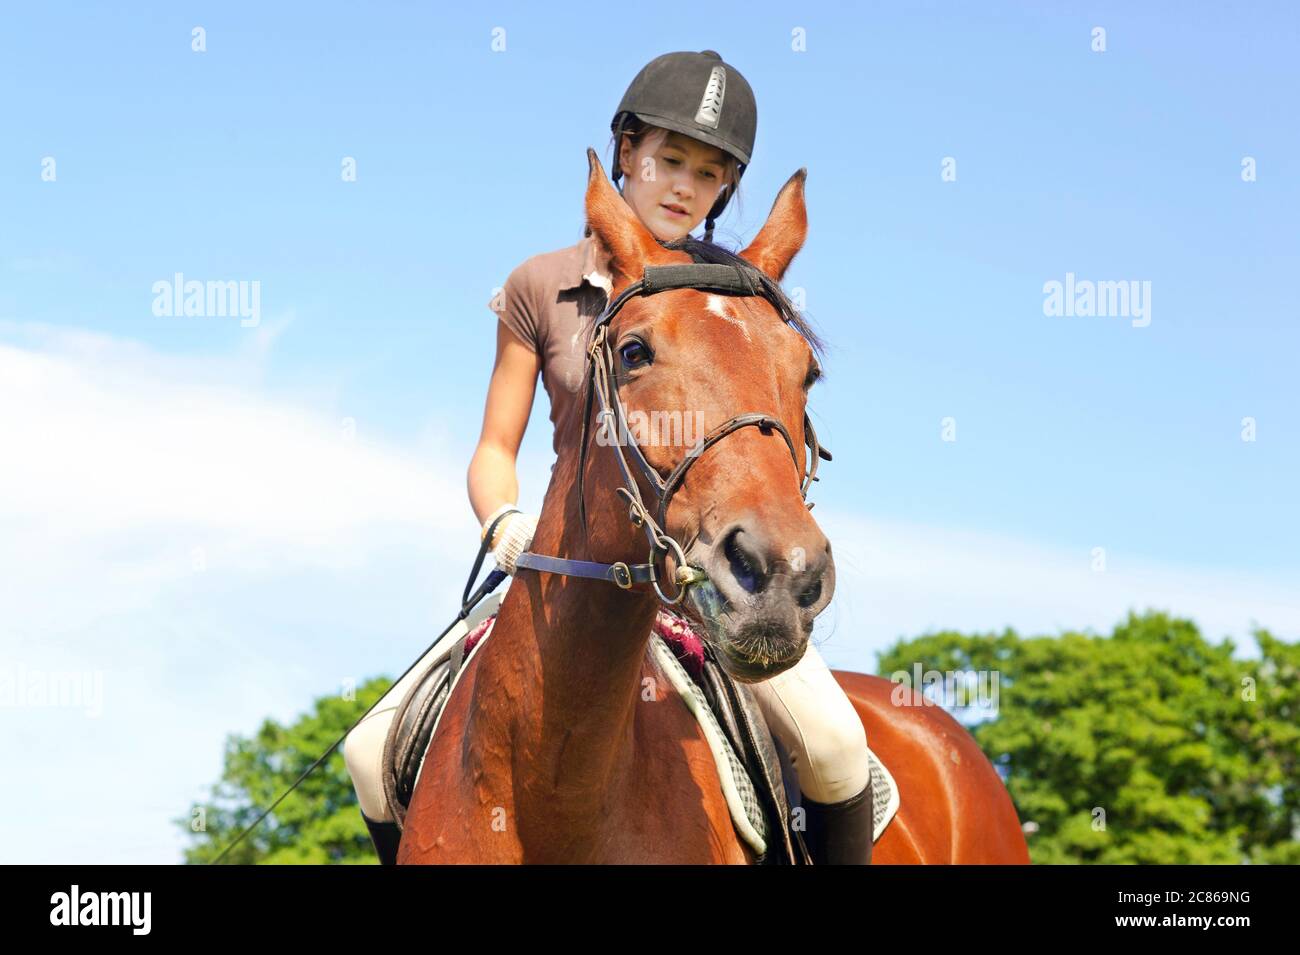 Adolescente caballo ecuestre. Vibrante verano exterior imagen horizontal. Foto de stock